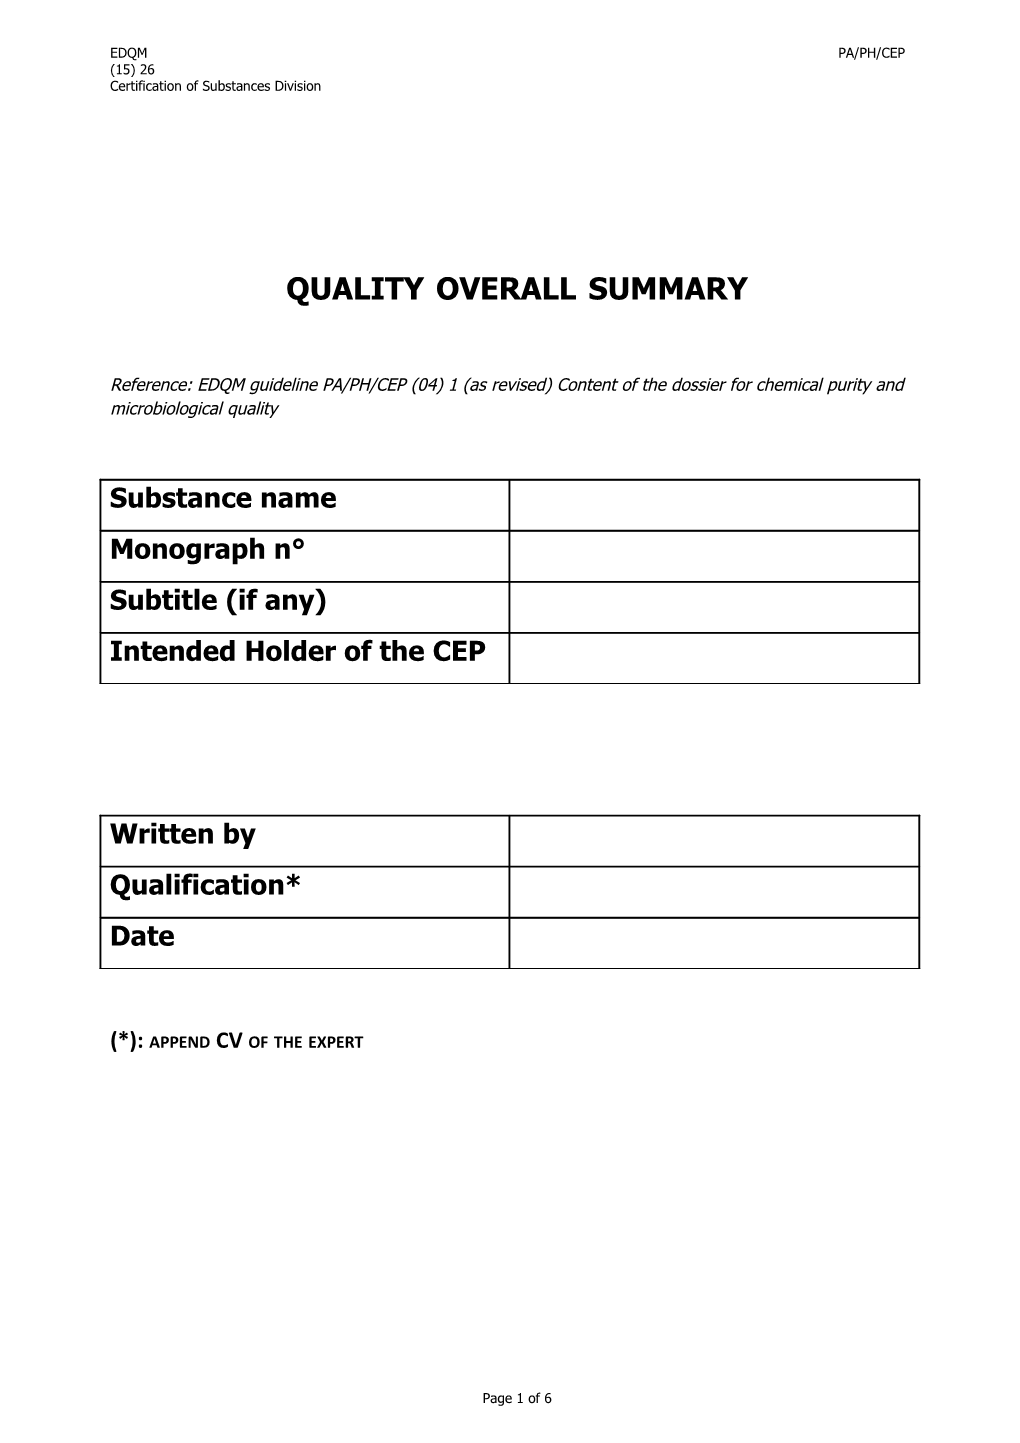 Quality Overall Summary